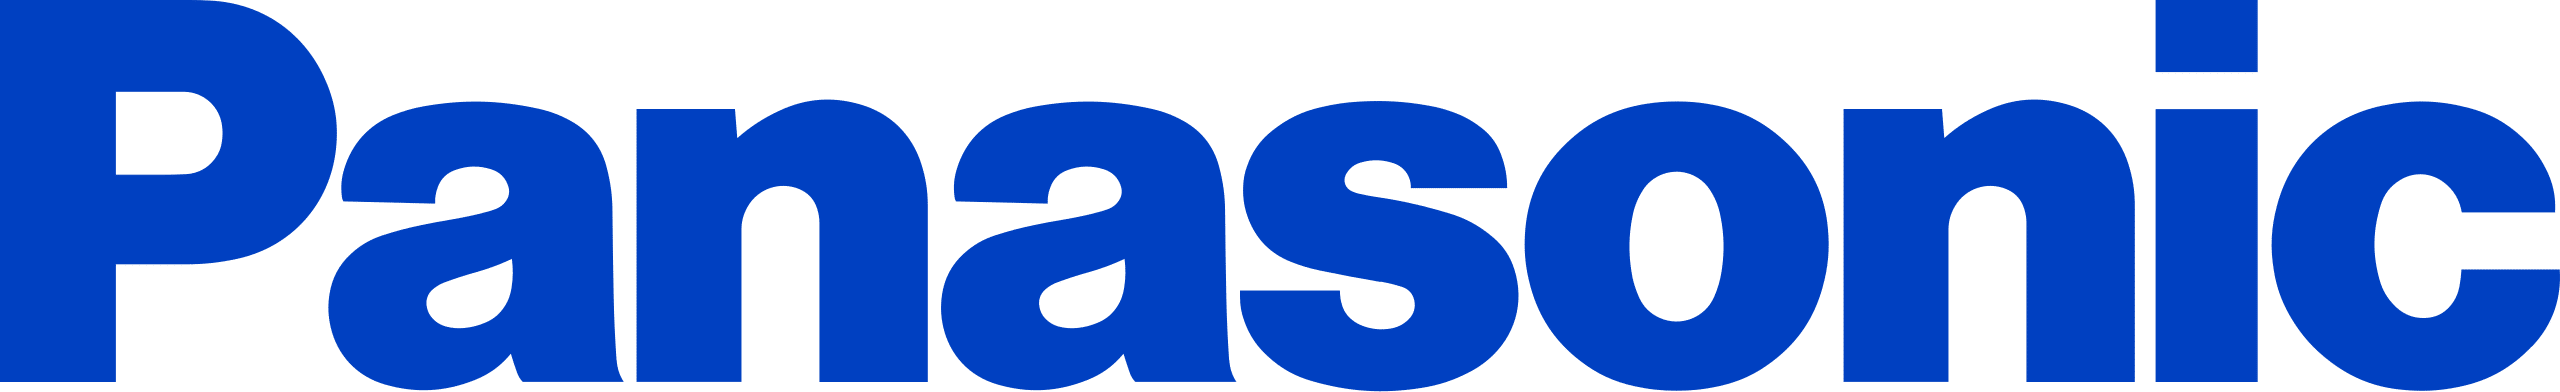 Panasonic group logo in blue